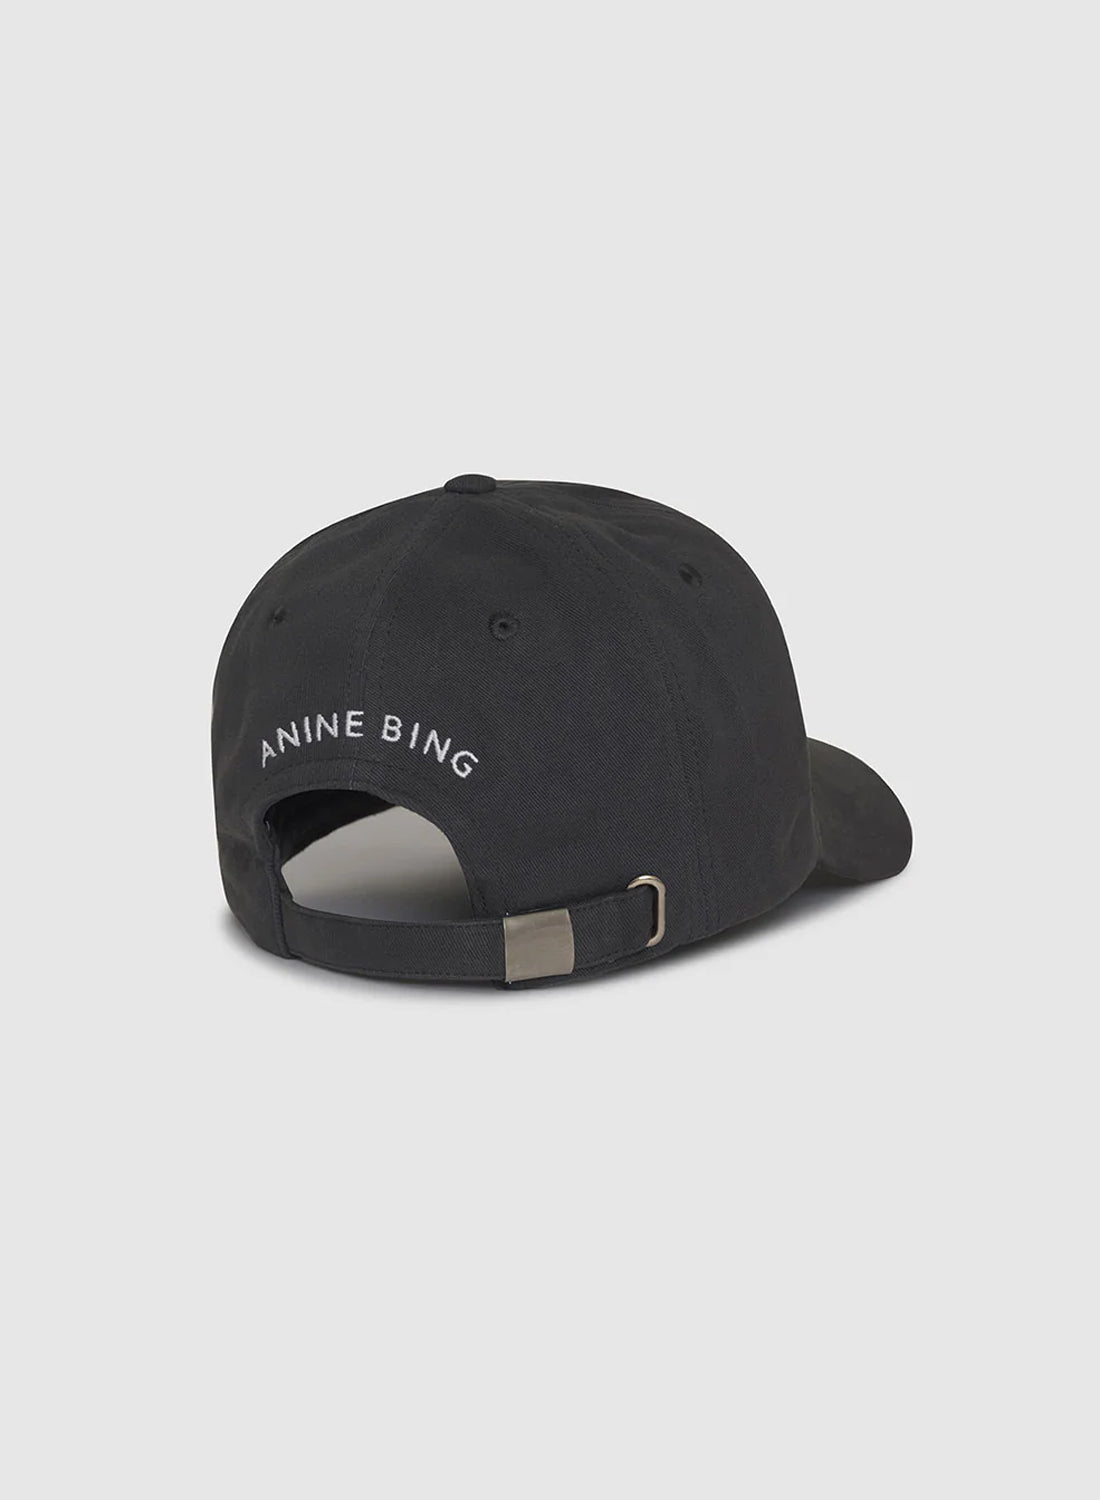 Anine Bing Jeremy Baseball Cap - Vintage Black